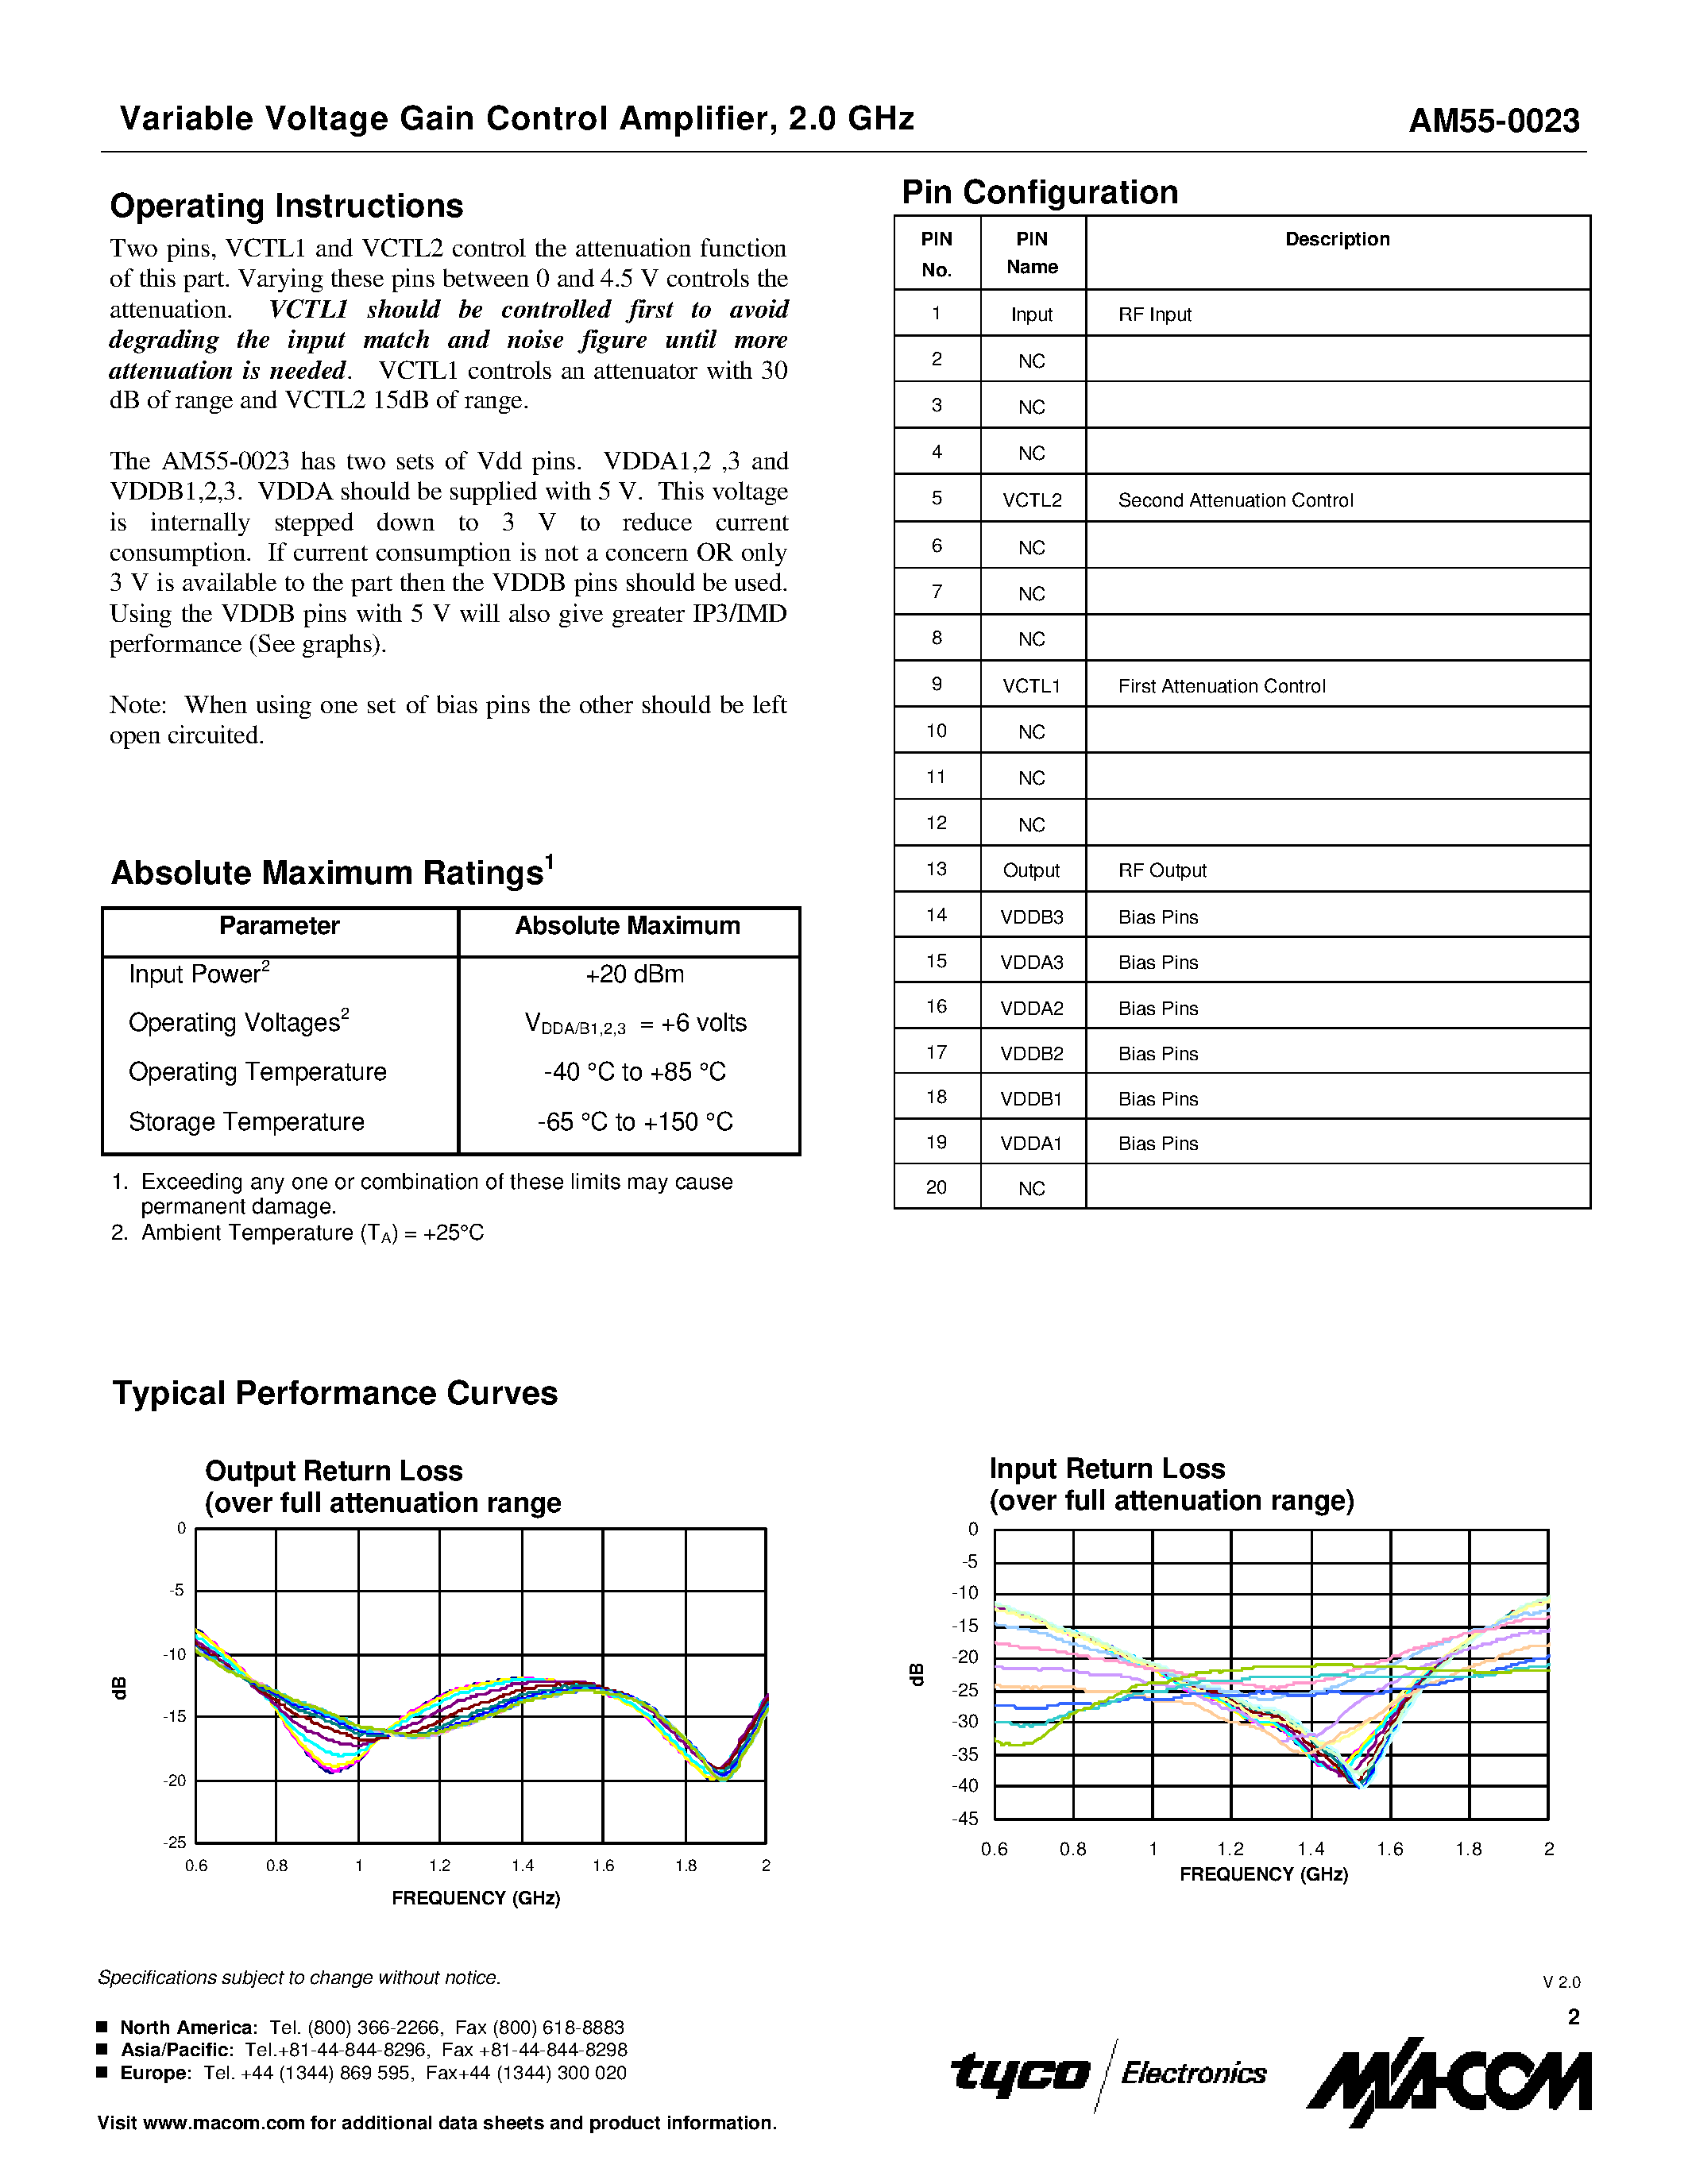 Даташит AM55-0023TR - Variable Voltage Gain Control Amplifier 0.8 - 2.0 GHz страница 2